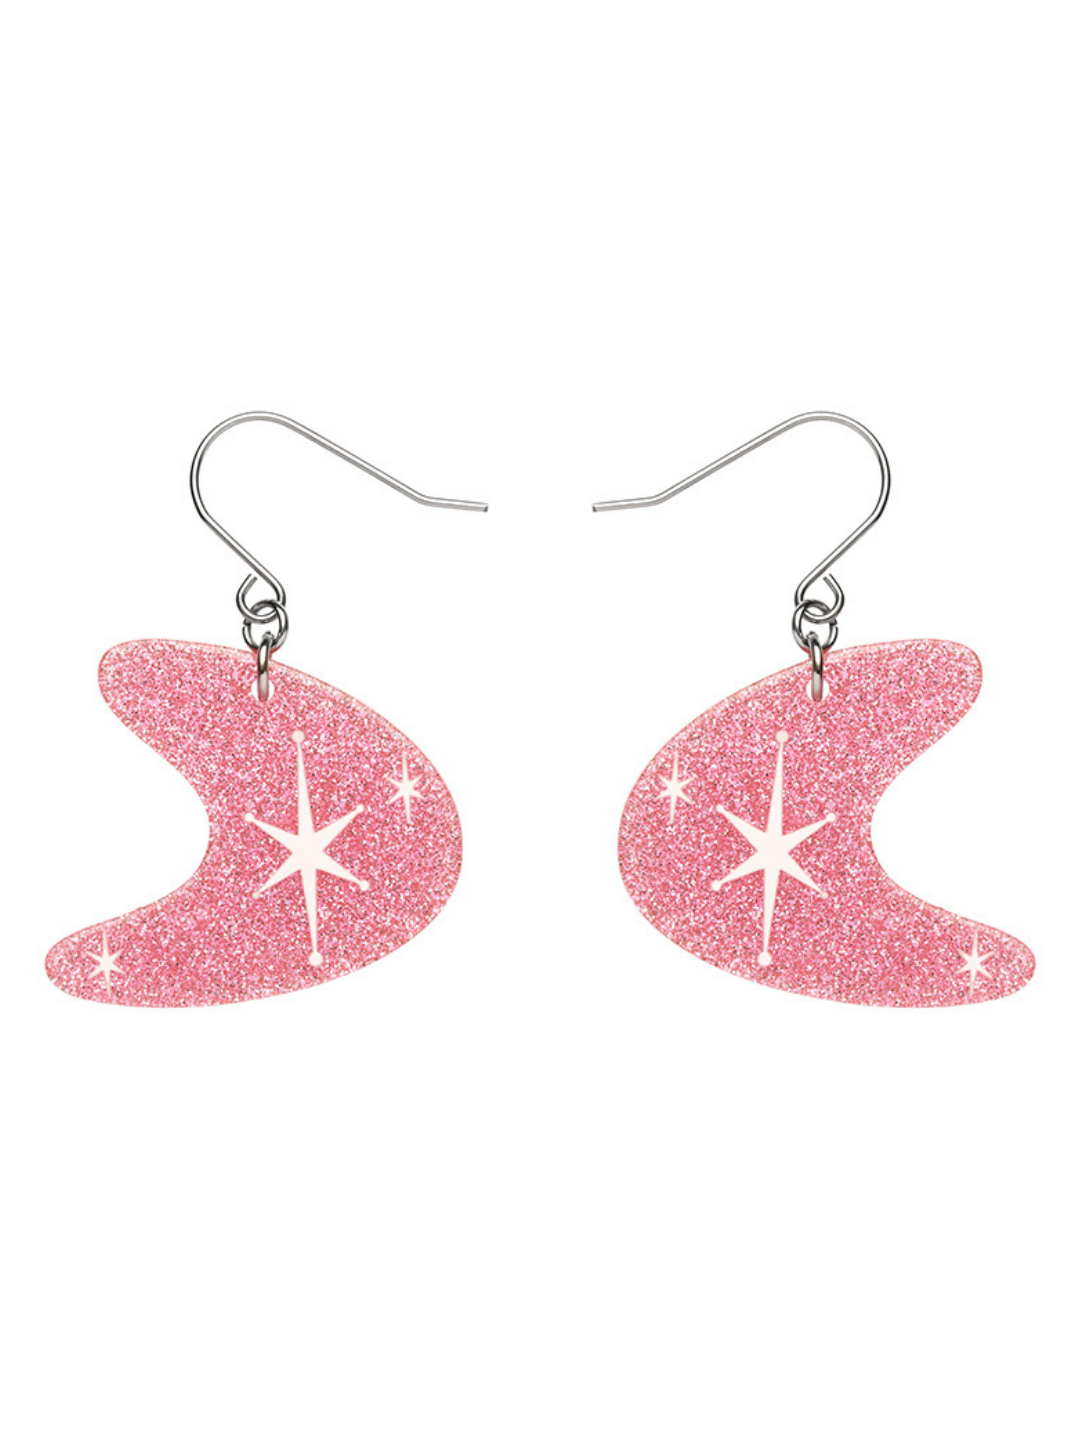 Atomic Boomerang Glitter Drop Earrings - Pink